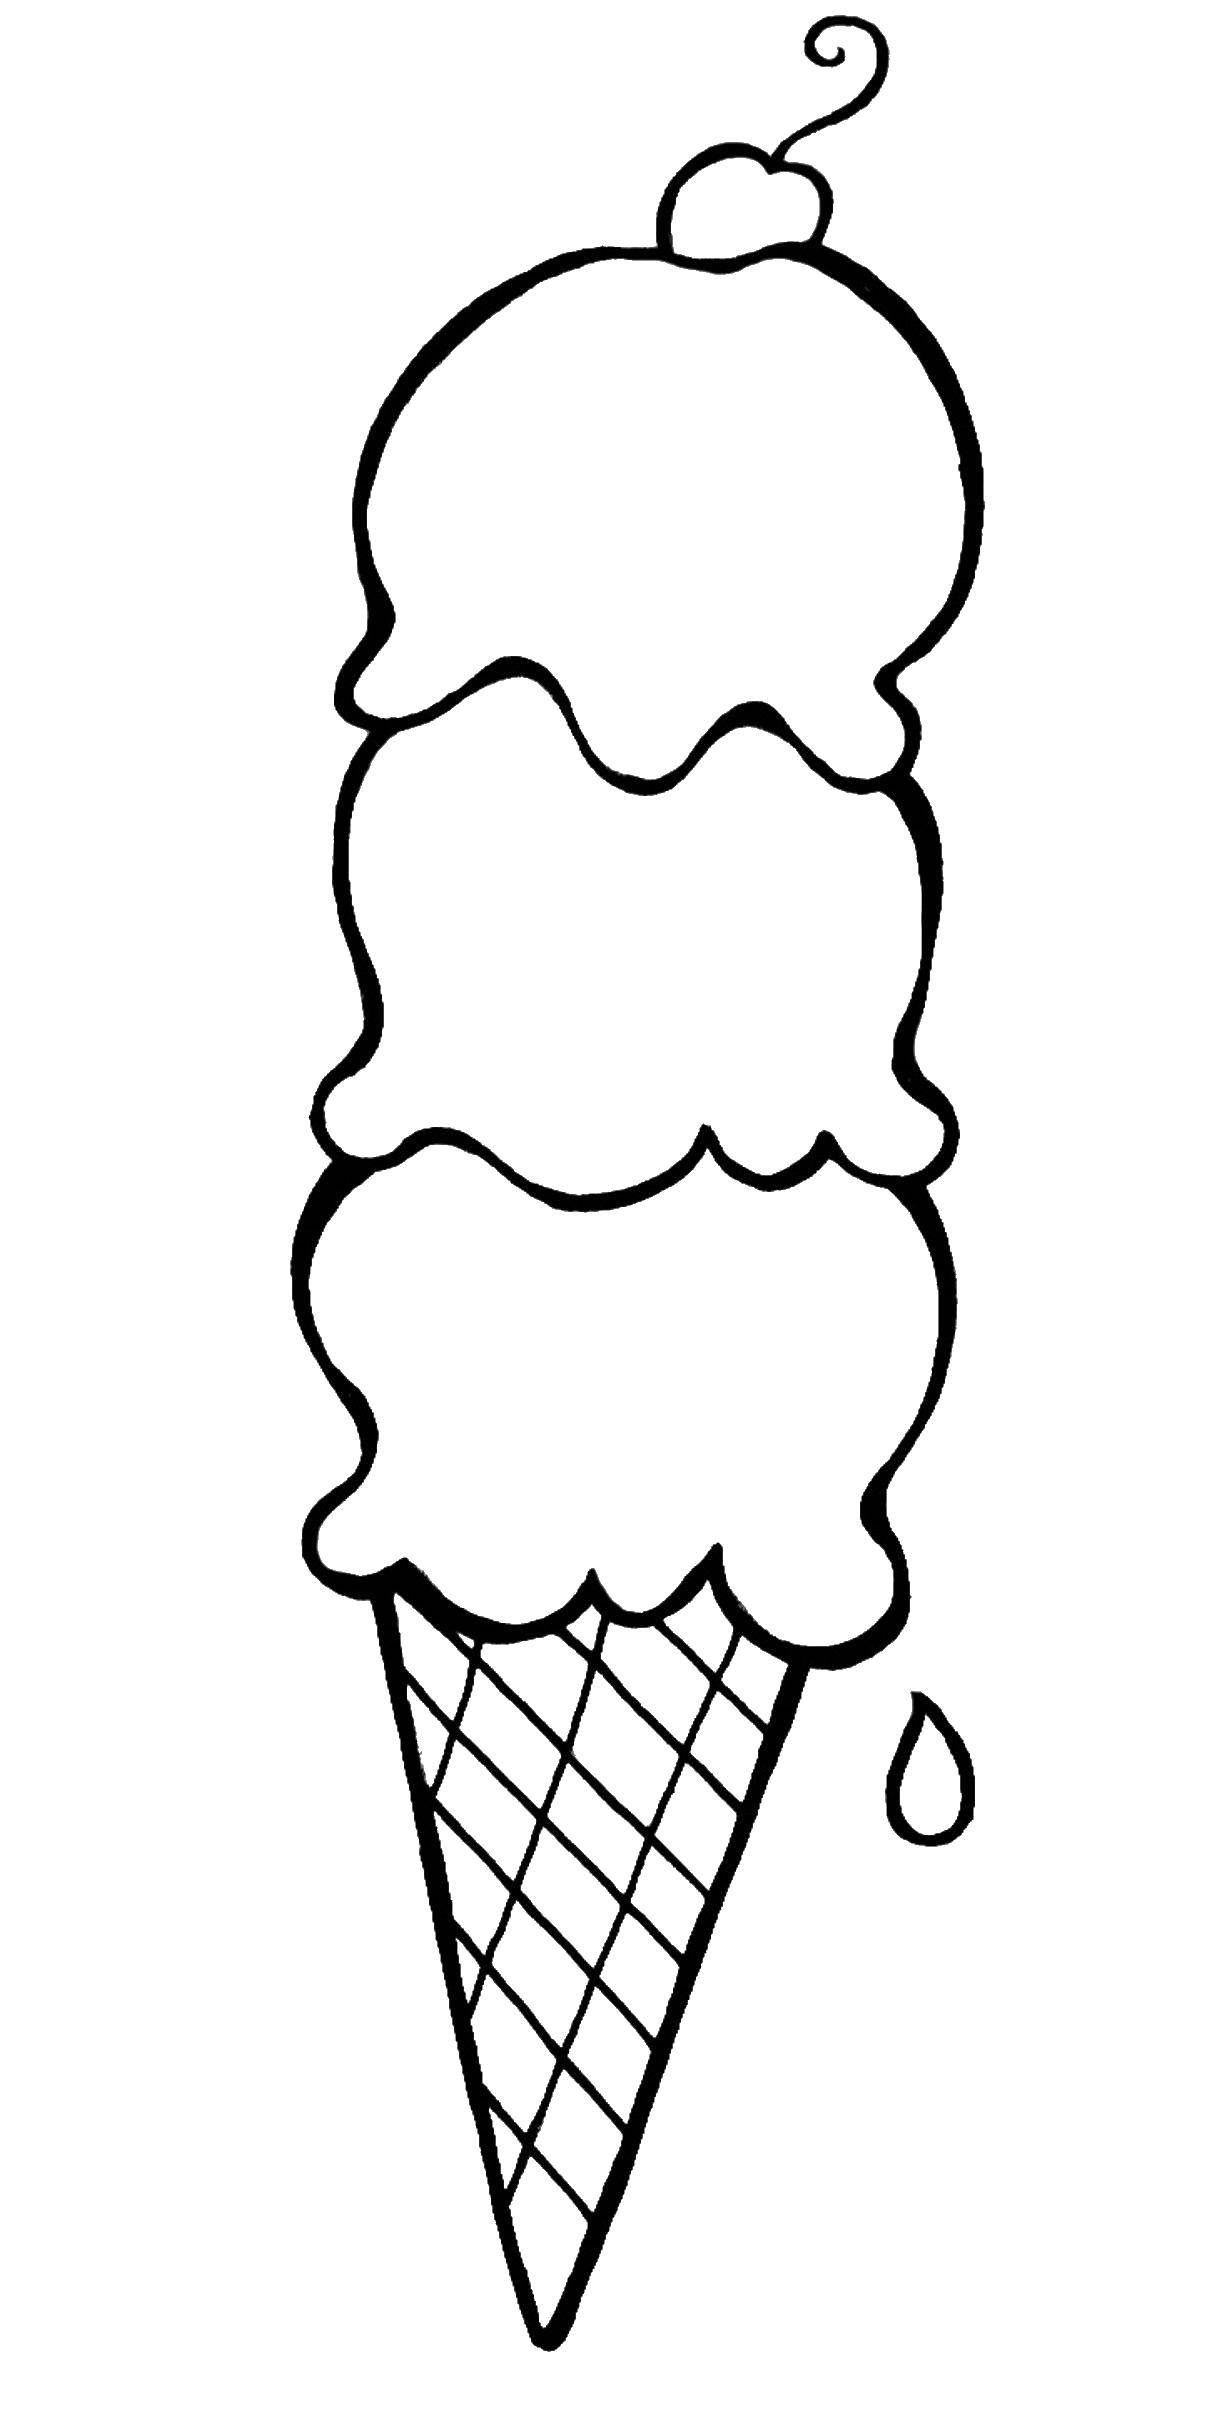 Coloring Waffle ice cream. Category ice cream. Tags:  ice cream, waffles.